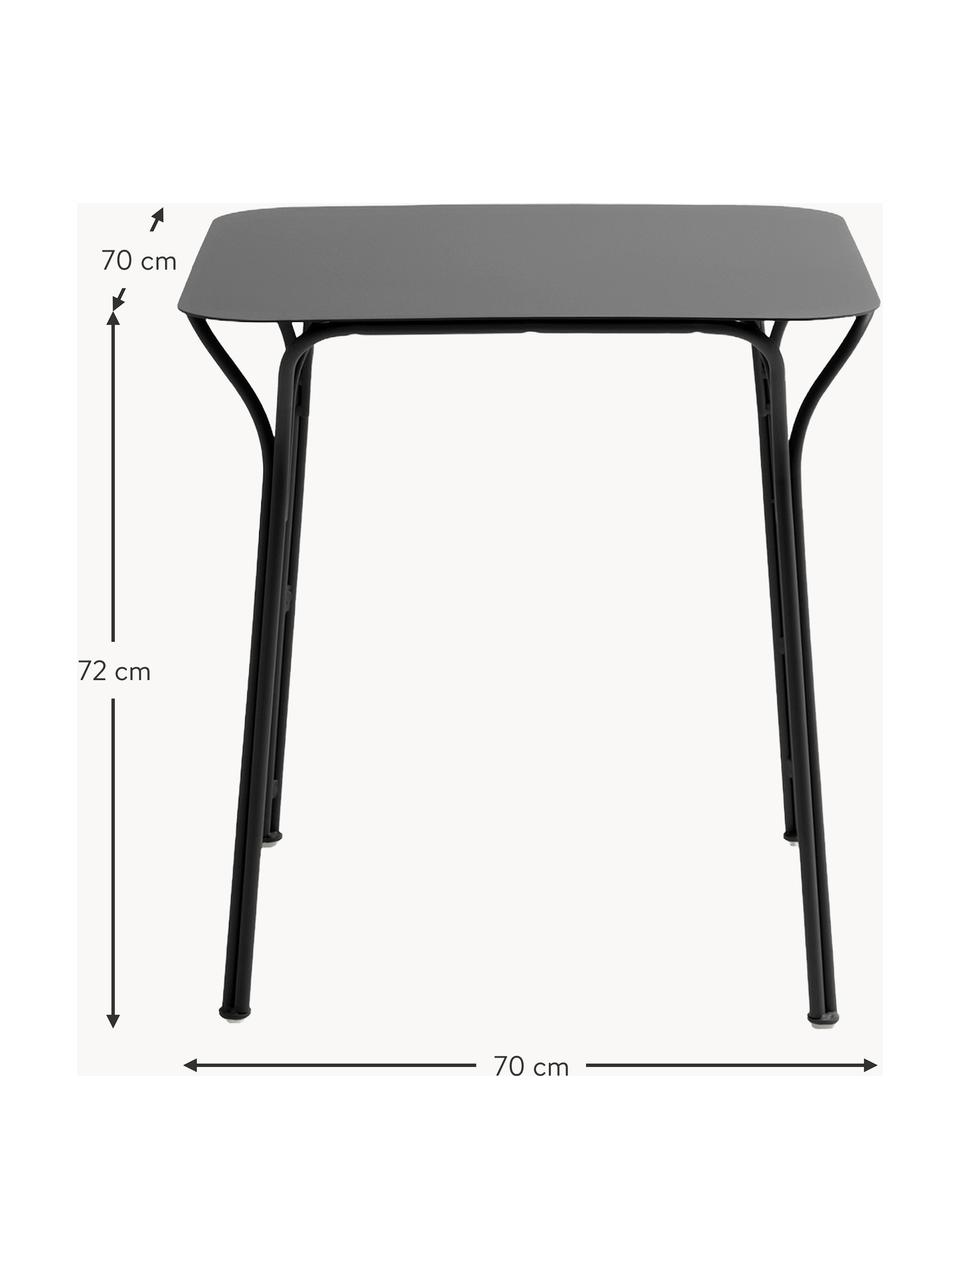 Zahradní stůl Hiray, 70 x 70 cm, Pozinkovaná lakovaná ocel, Černá, Š 70 cm, V 70 cm